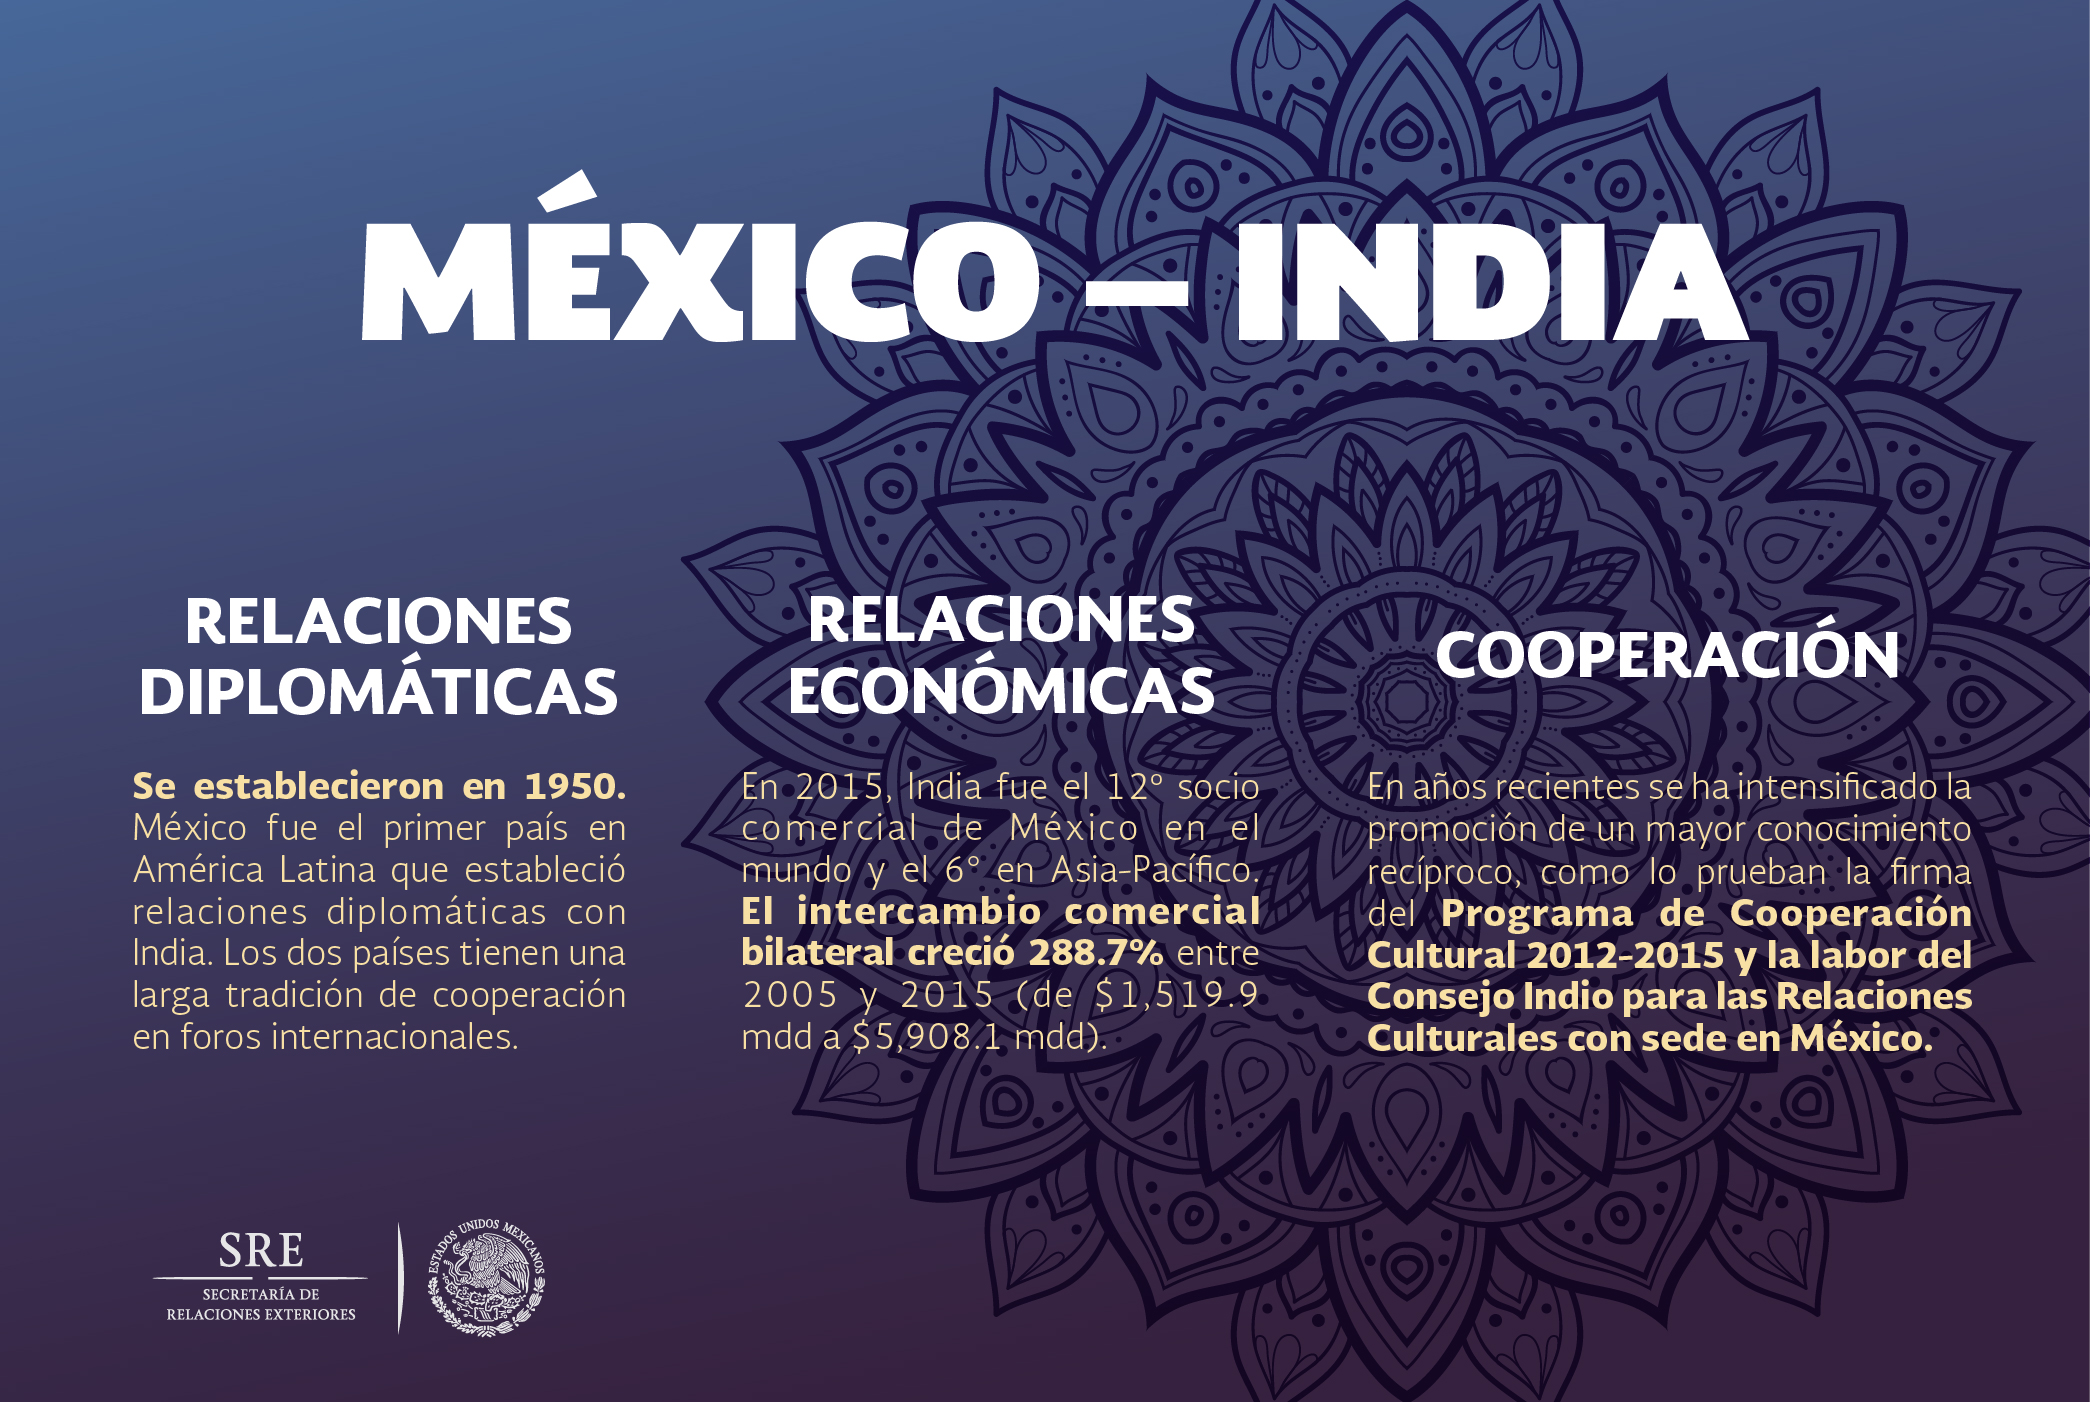 /cms/uploads/image/file/156680/Infograf_a_Mexico_India.jpg